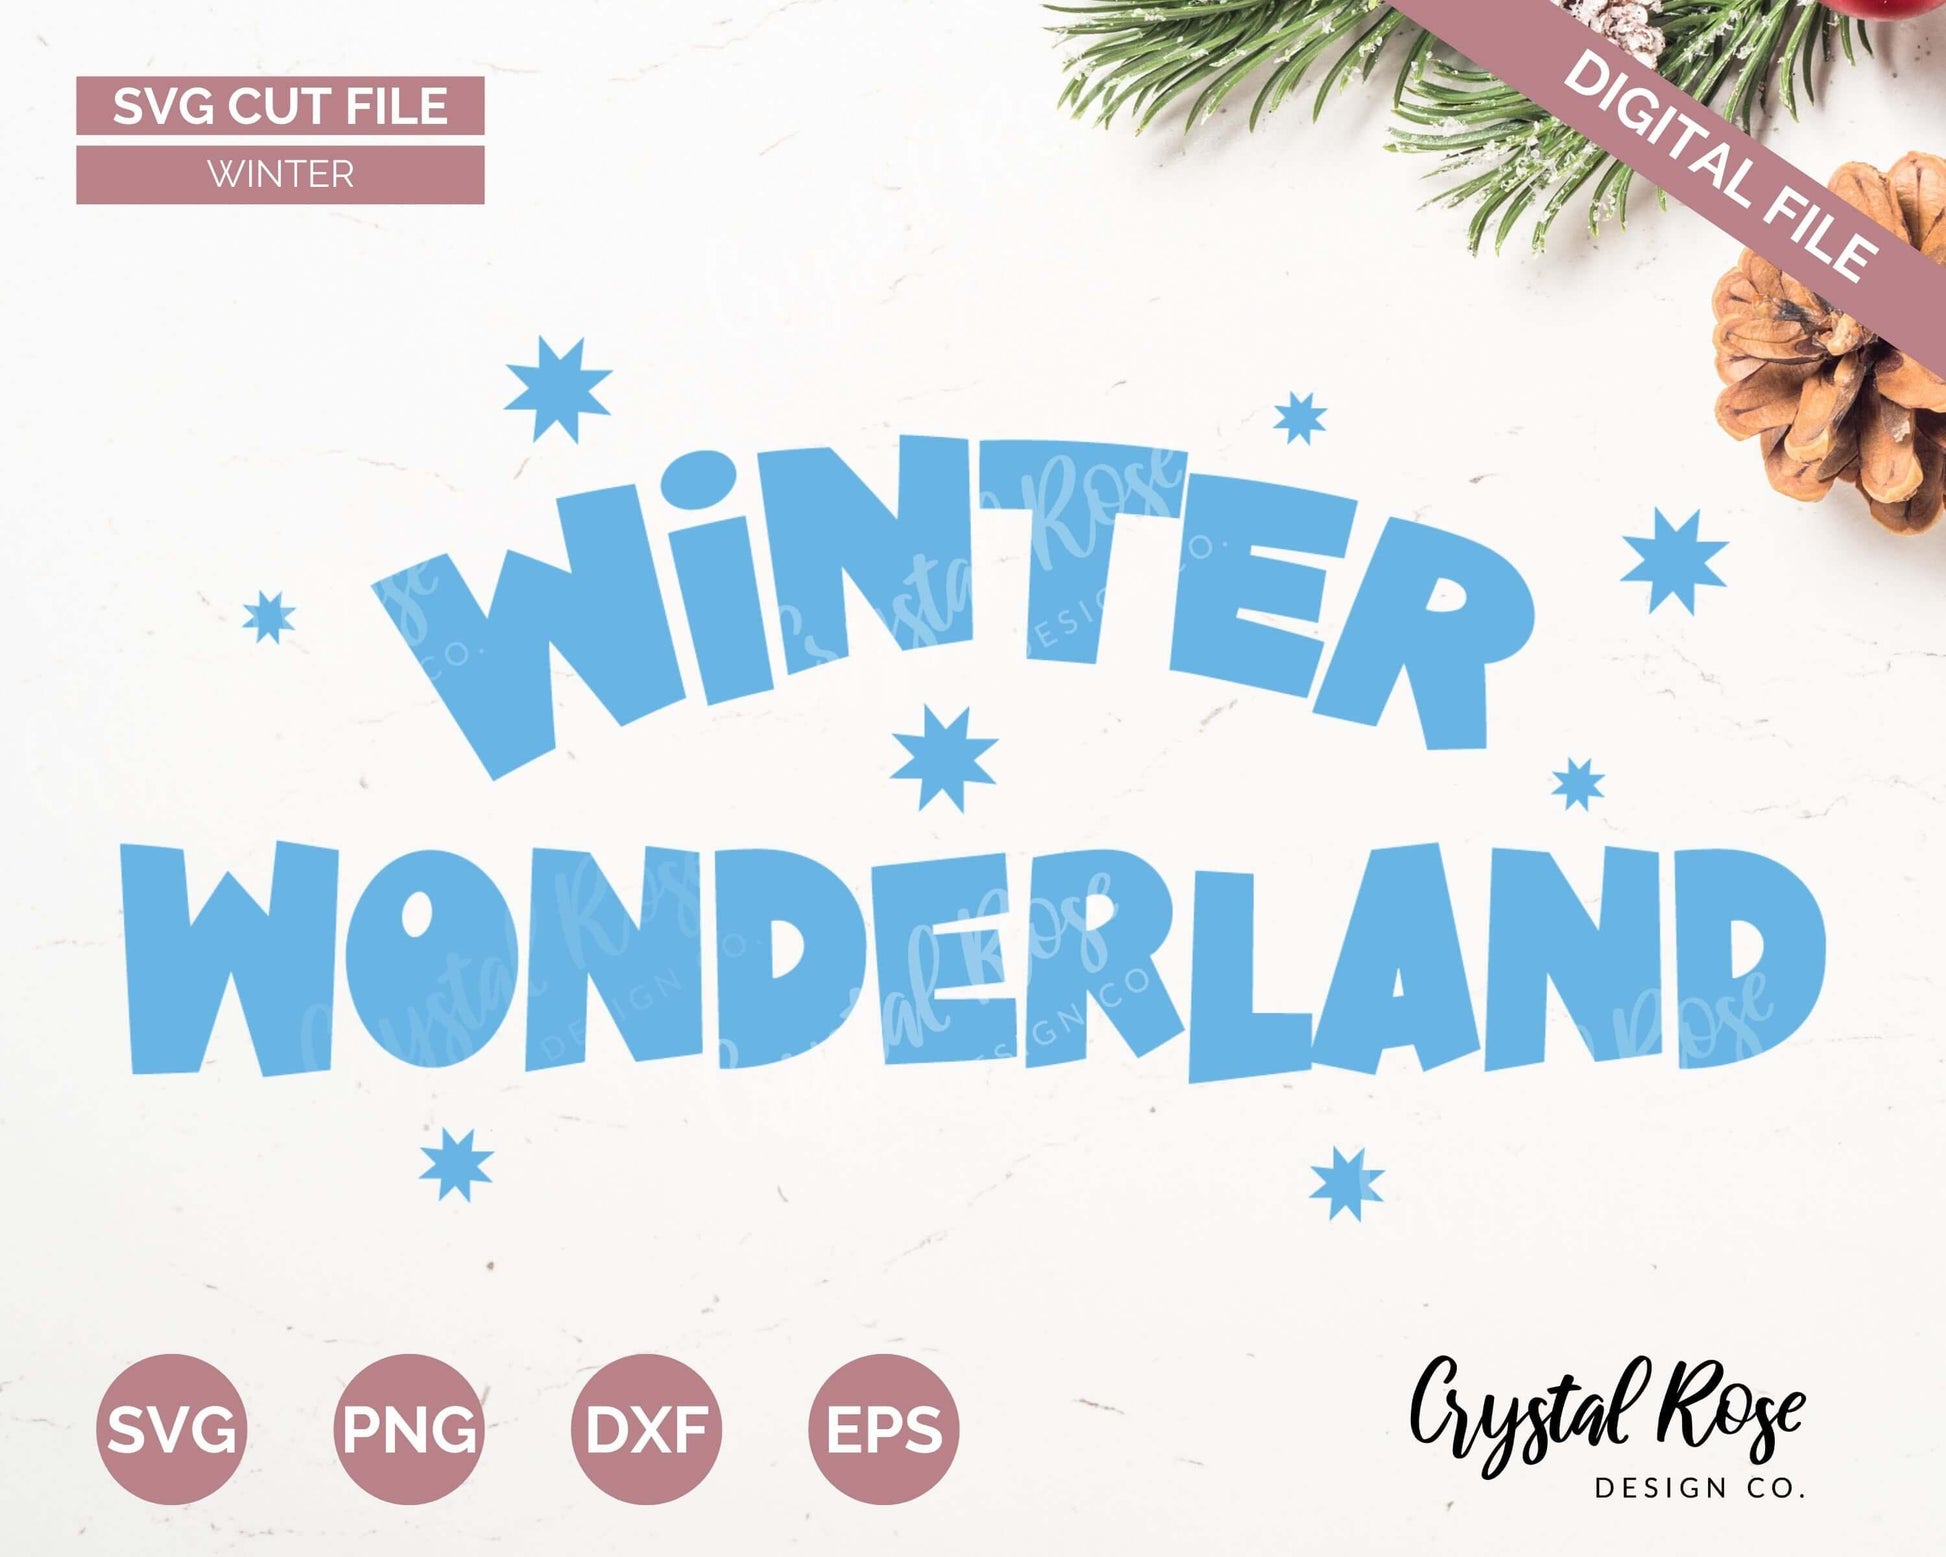 Retro Winter Wonderland SVG, Digital Download, Cricut, Silhouette, Glowforge (includes svg/png/dxf/eps) - Crystal Rose Design Co.